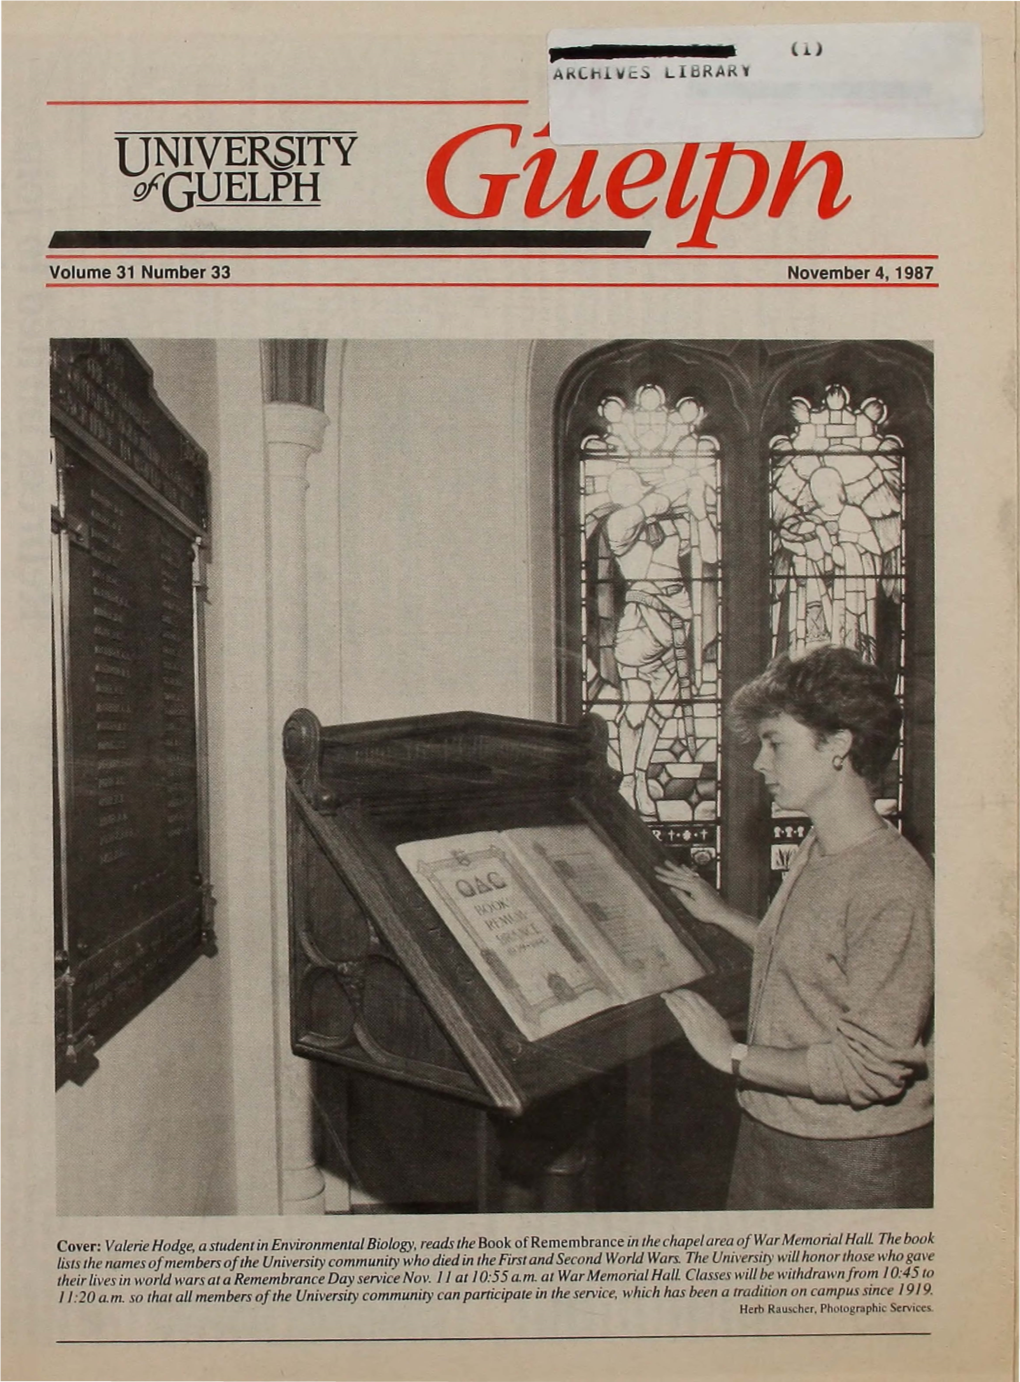 GUELPH Gueqjh Volume 31 Number 33 November 4, 1987